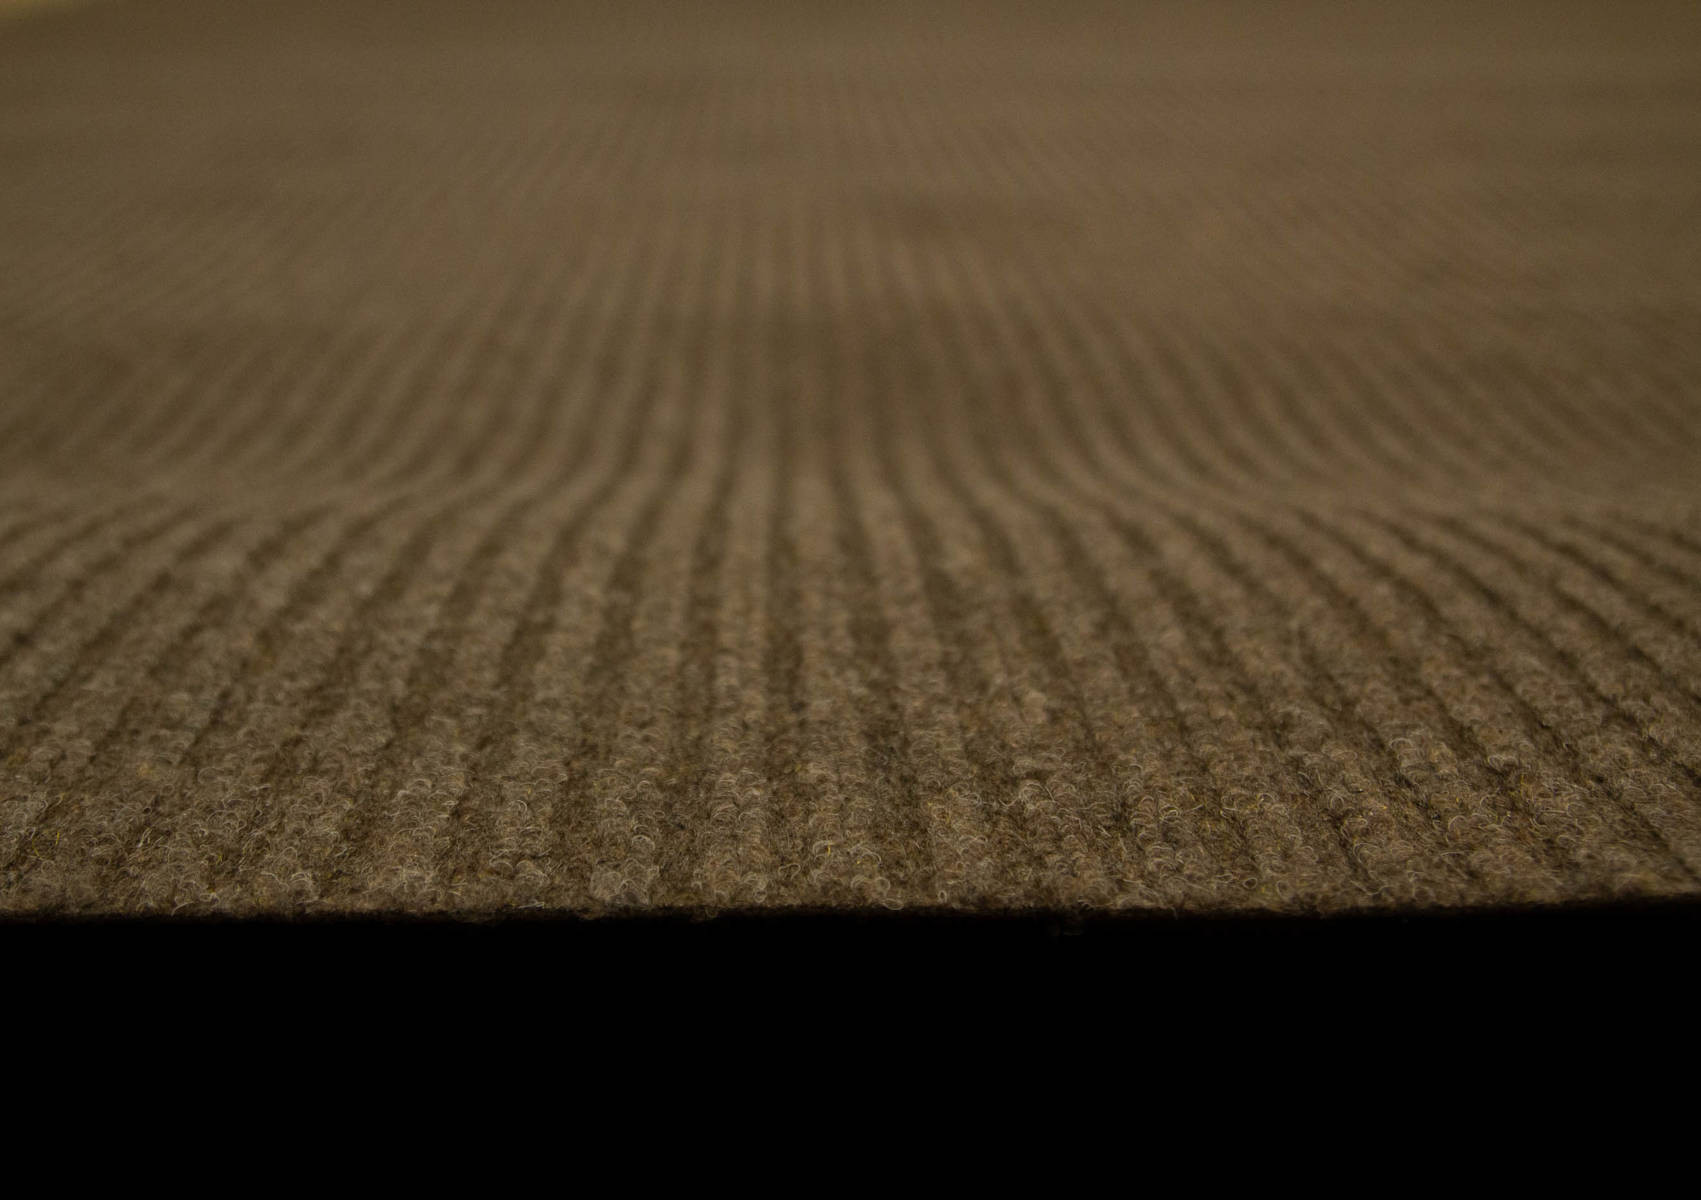 Metrážny koberec Duo 93 hnedý  